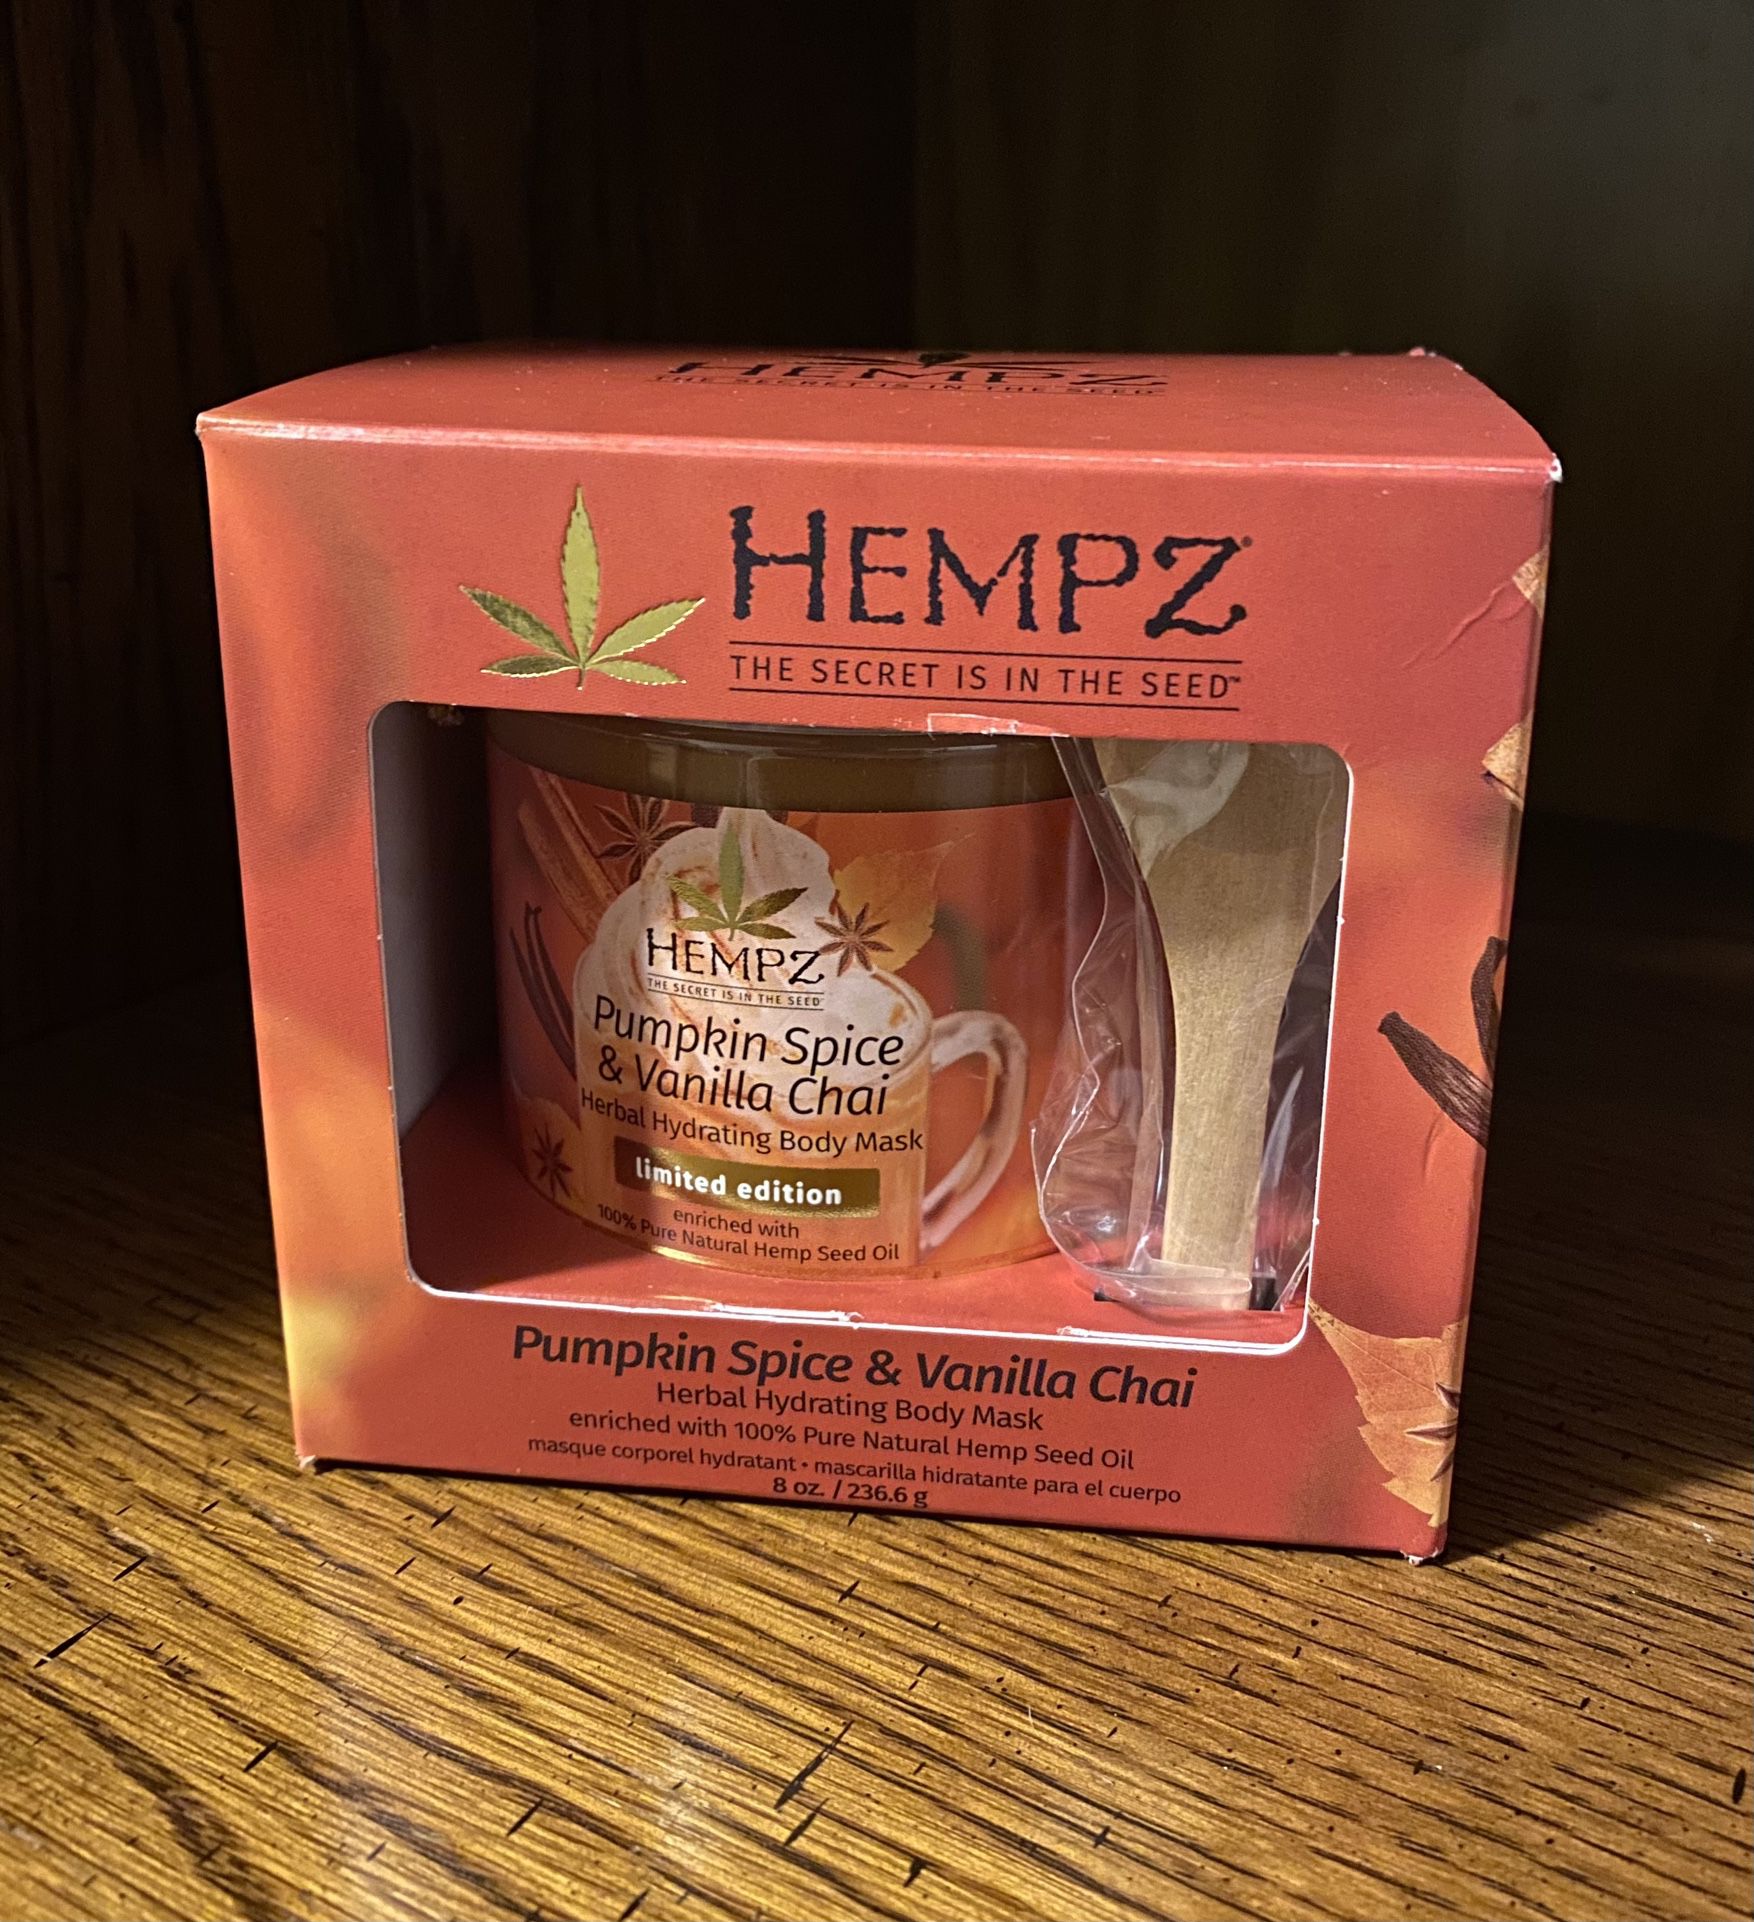 New! Hempz Pumpkin Spice & Vanilla Chai Herbal | Limited Edition |  Hydrating Body Mask